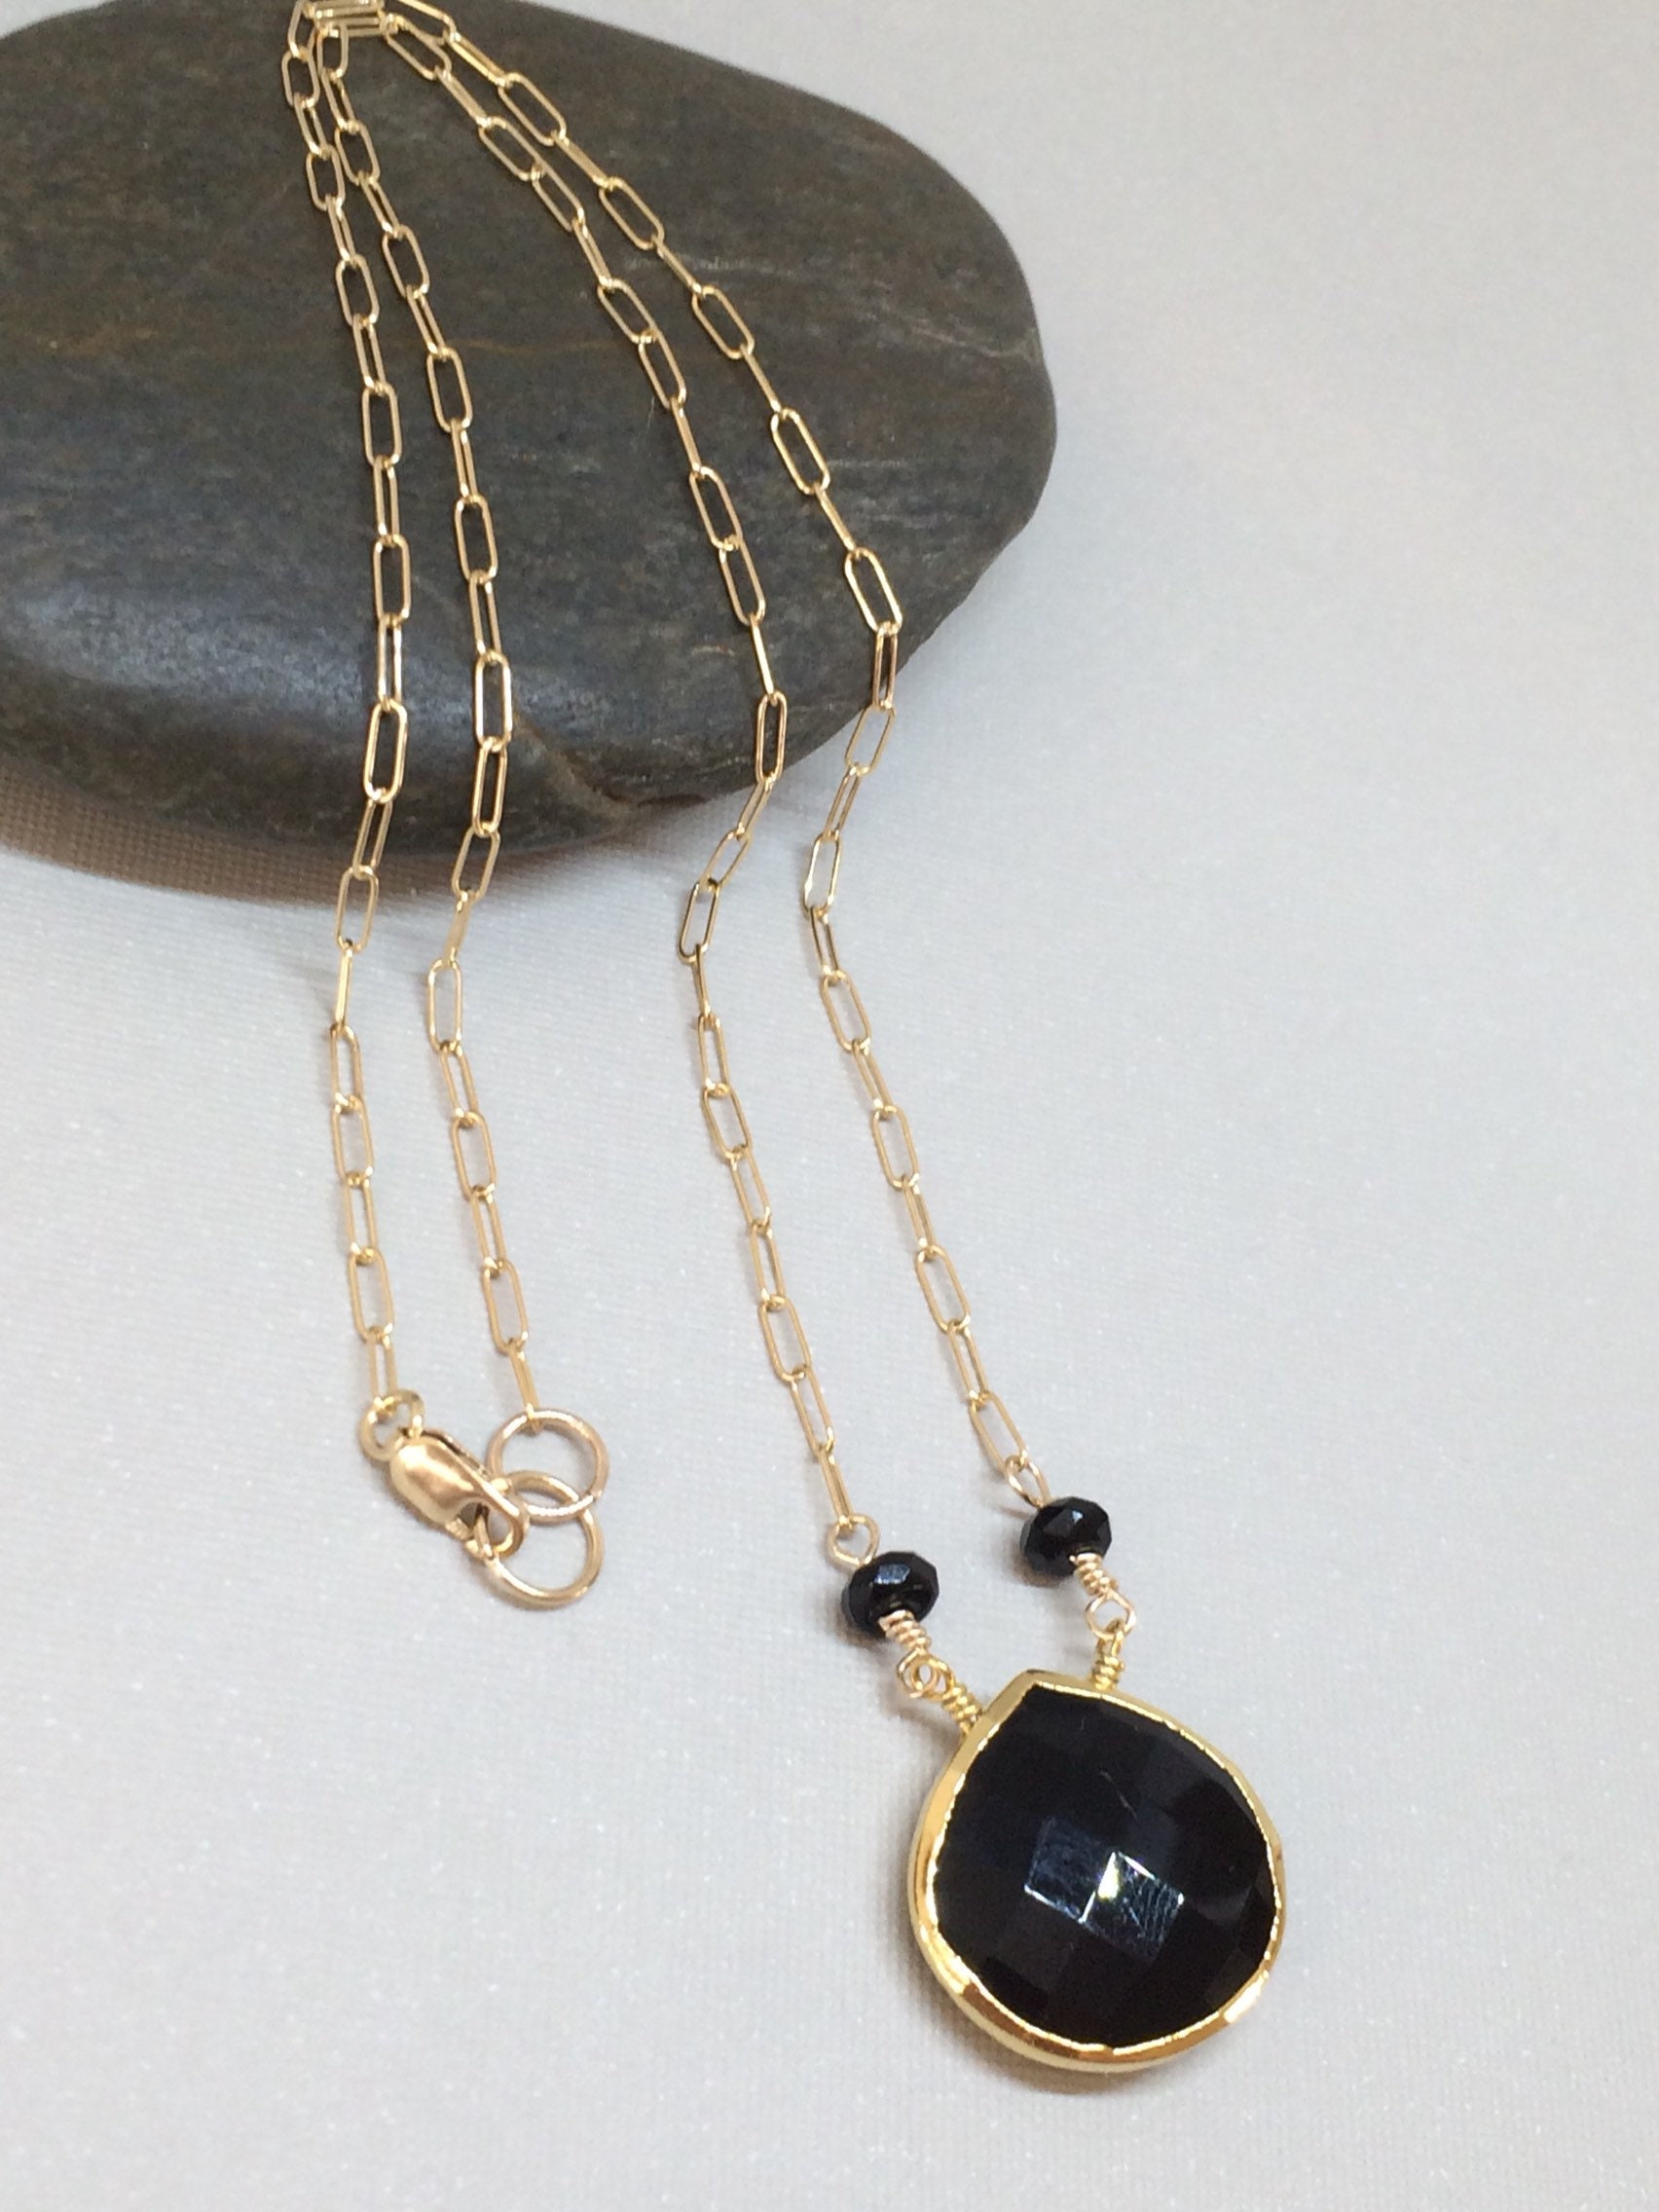 Black Onyx and 14k Gold Filled Necklace Black Onyx Pendant | Etsy